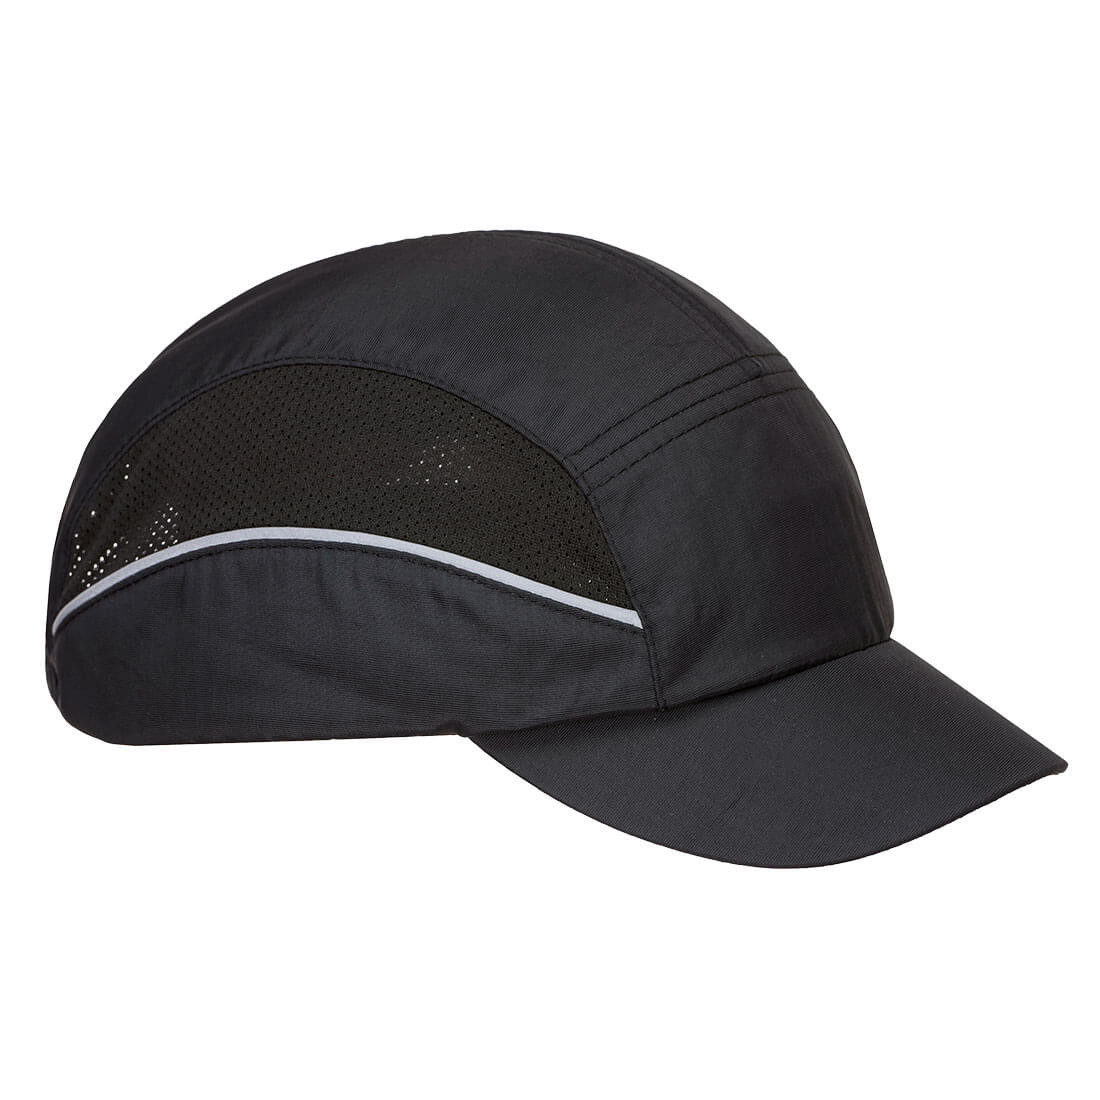 AirTech Bump Cap - Safetywear